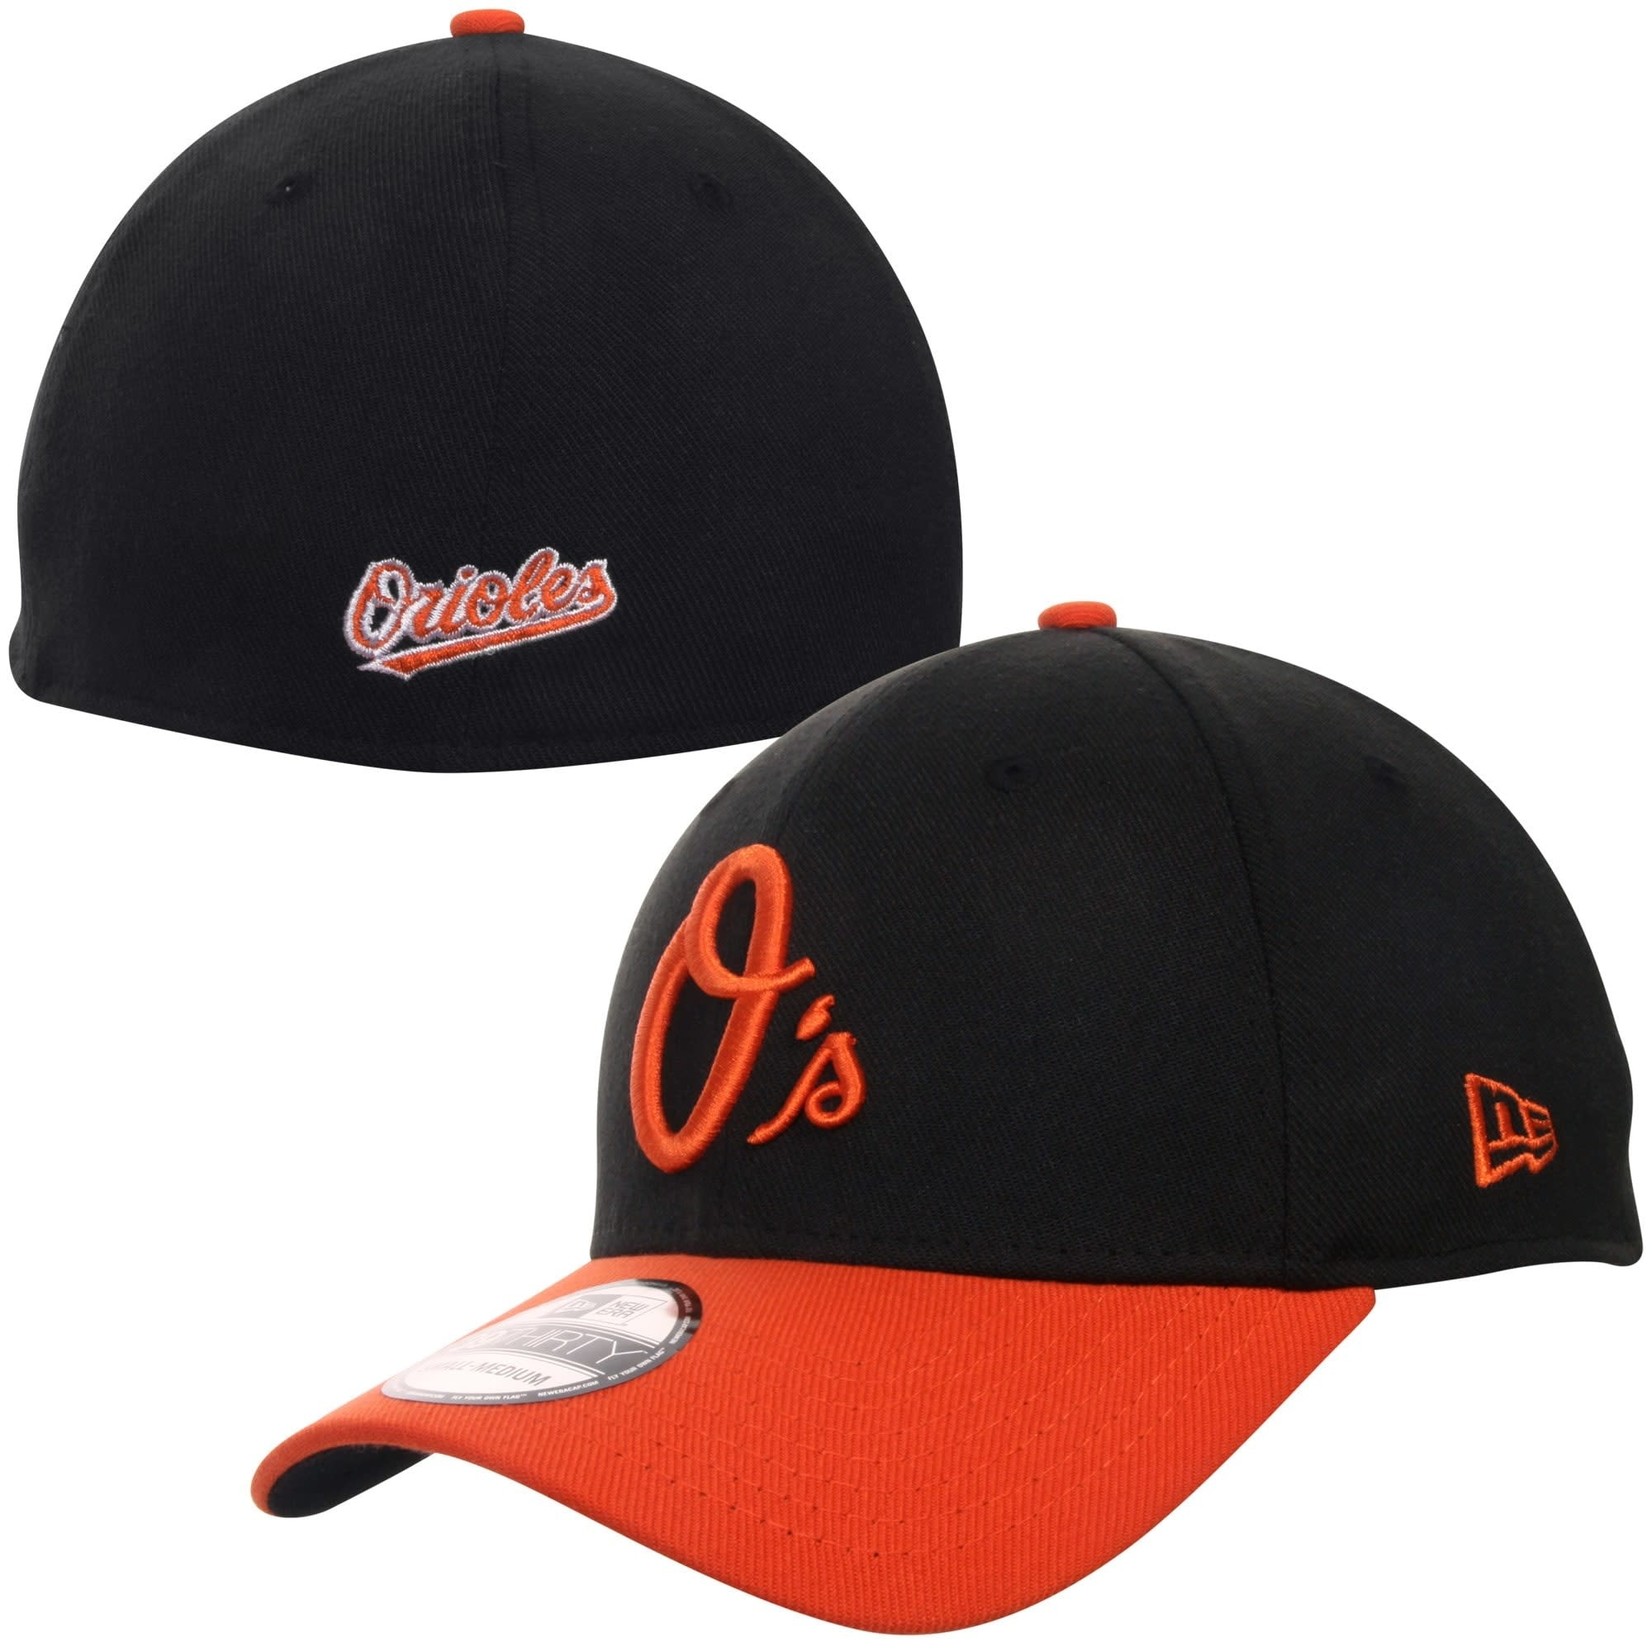 New Era Men's New Era Black Baltimore Orioles MLB Team Classic 39THIRTY Flex Hat